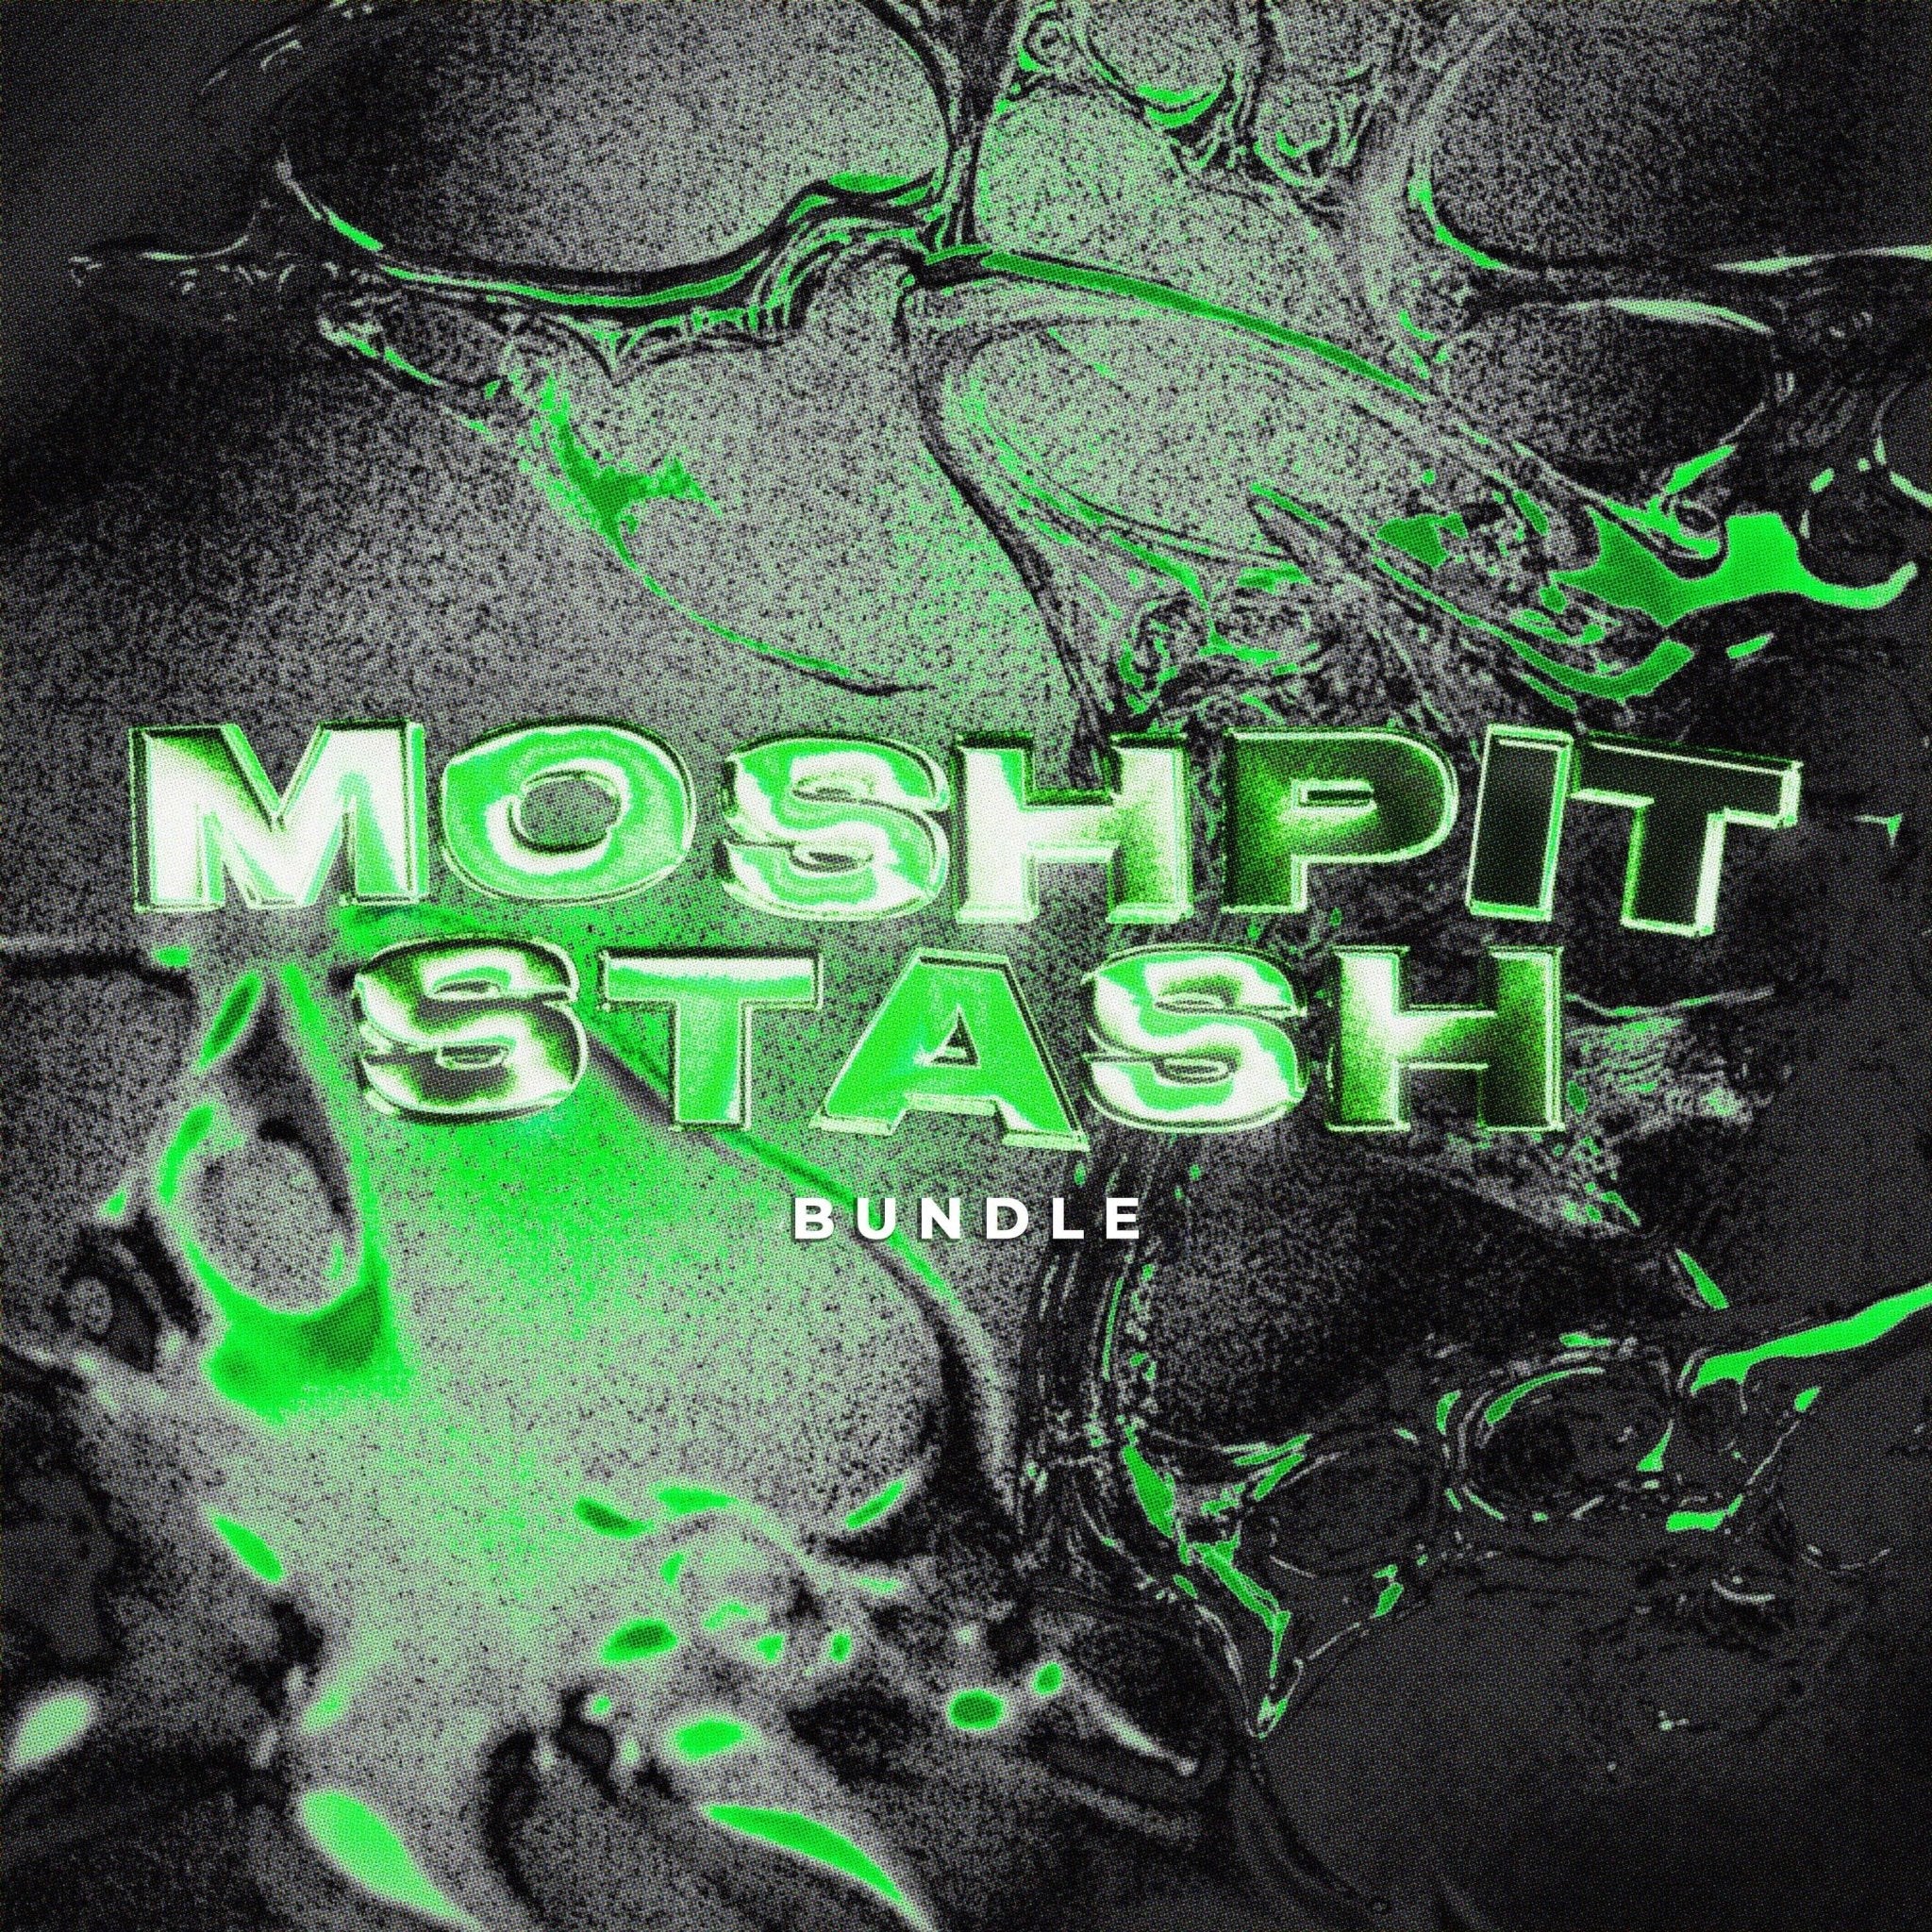 » Moshpit Stash (Bundle) (100% off) - Thirteen Tecc Records